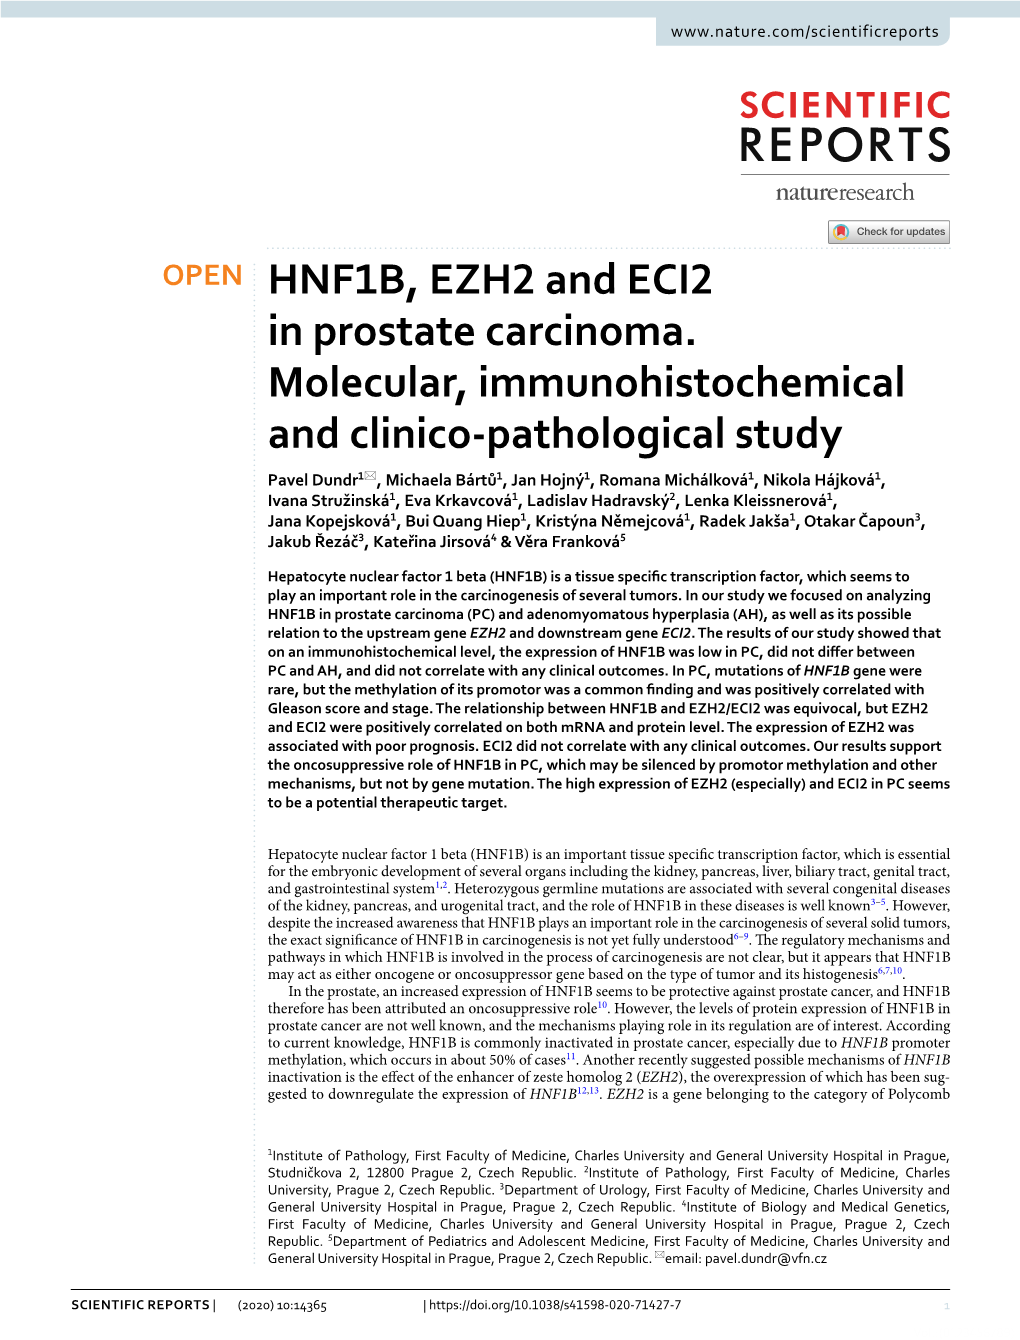 HNF1B, EZH2 and ECI2 in Prostate Carcinoma. Molecular